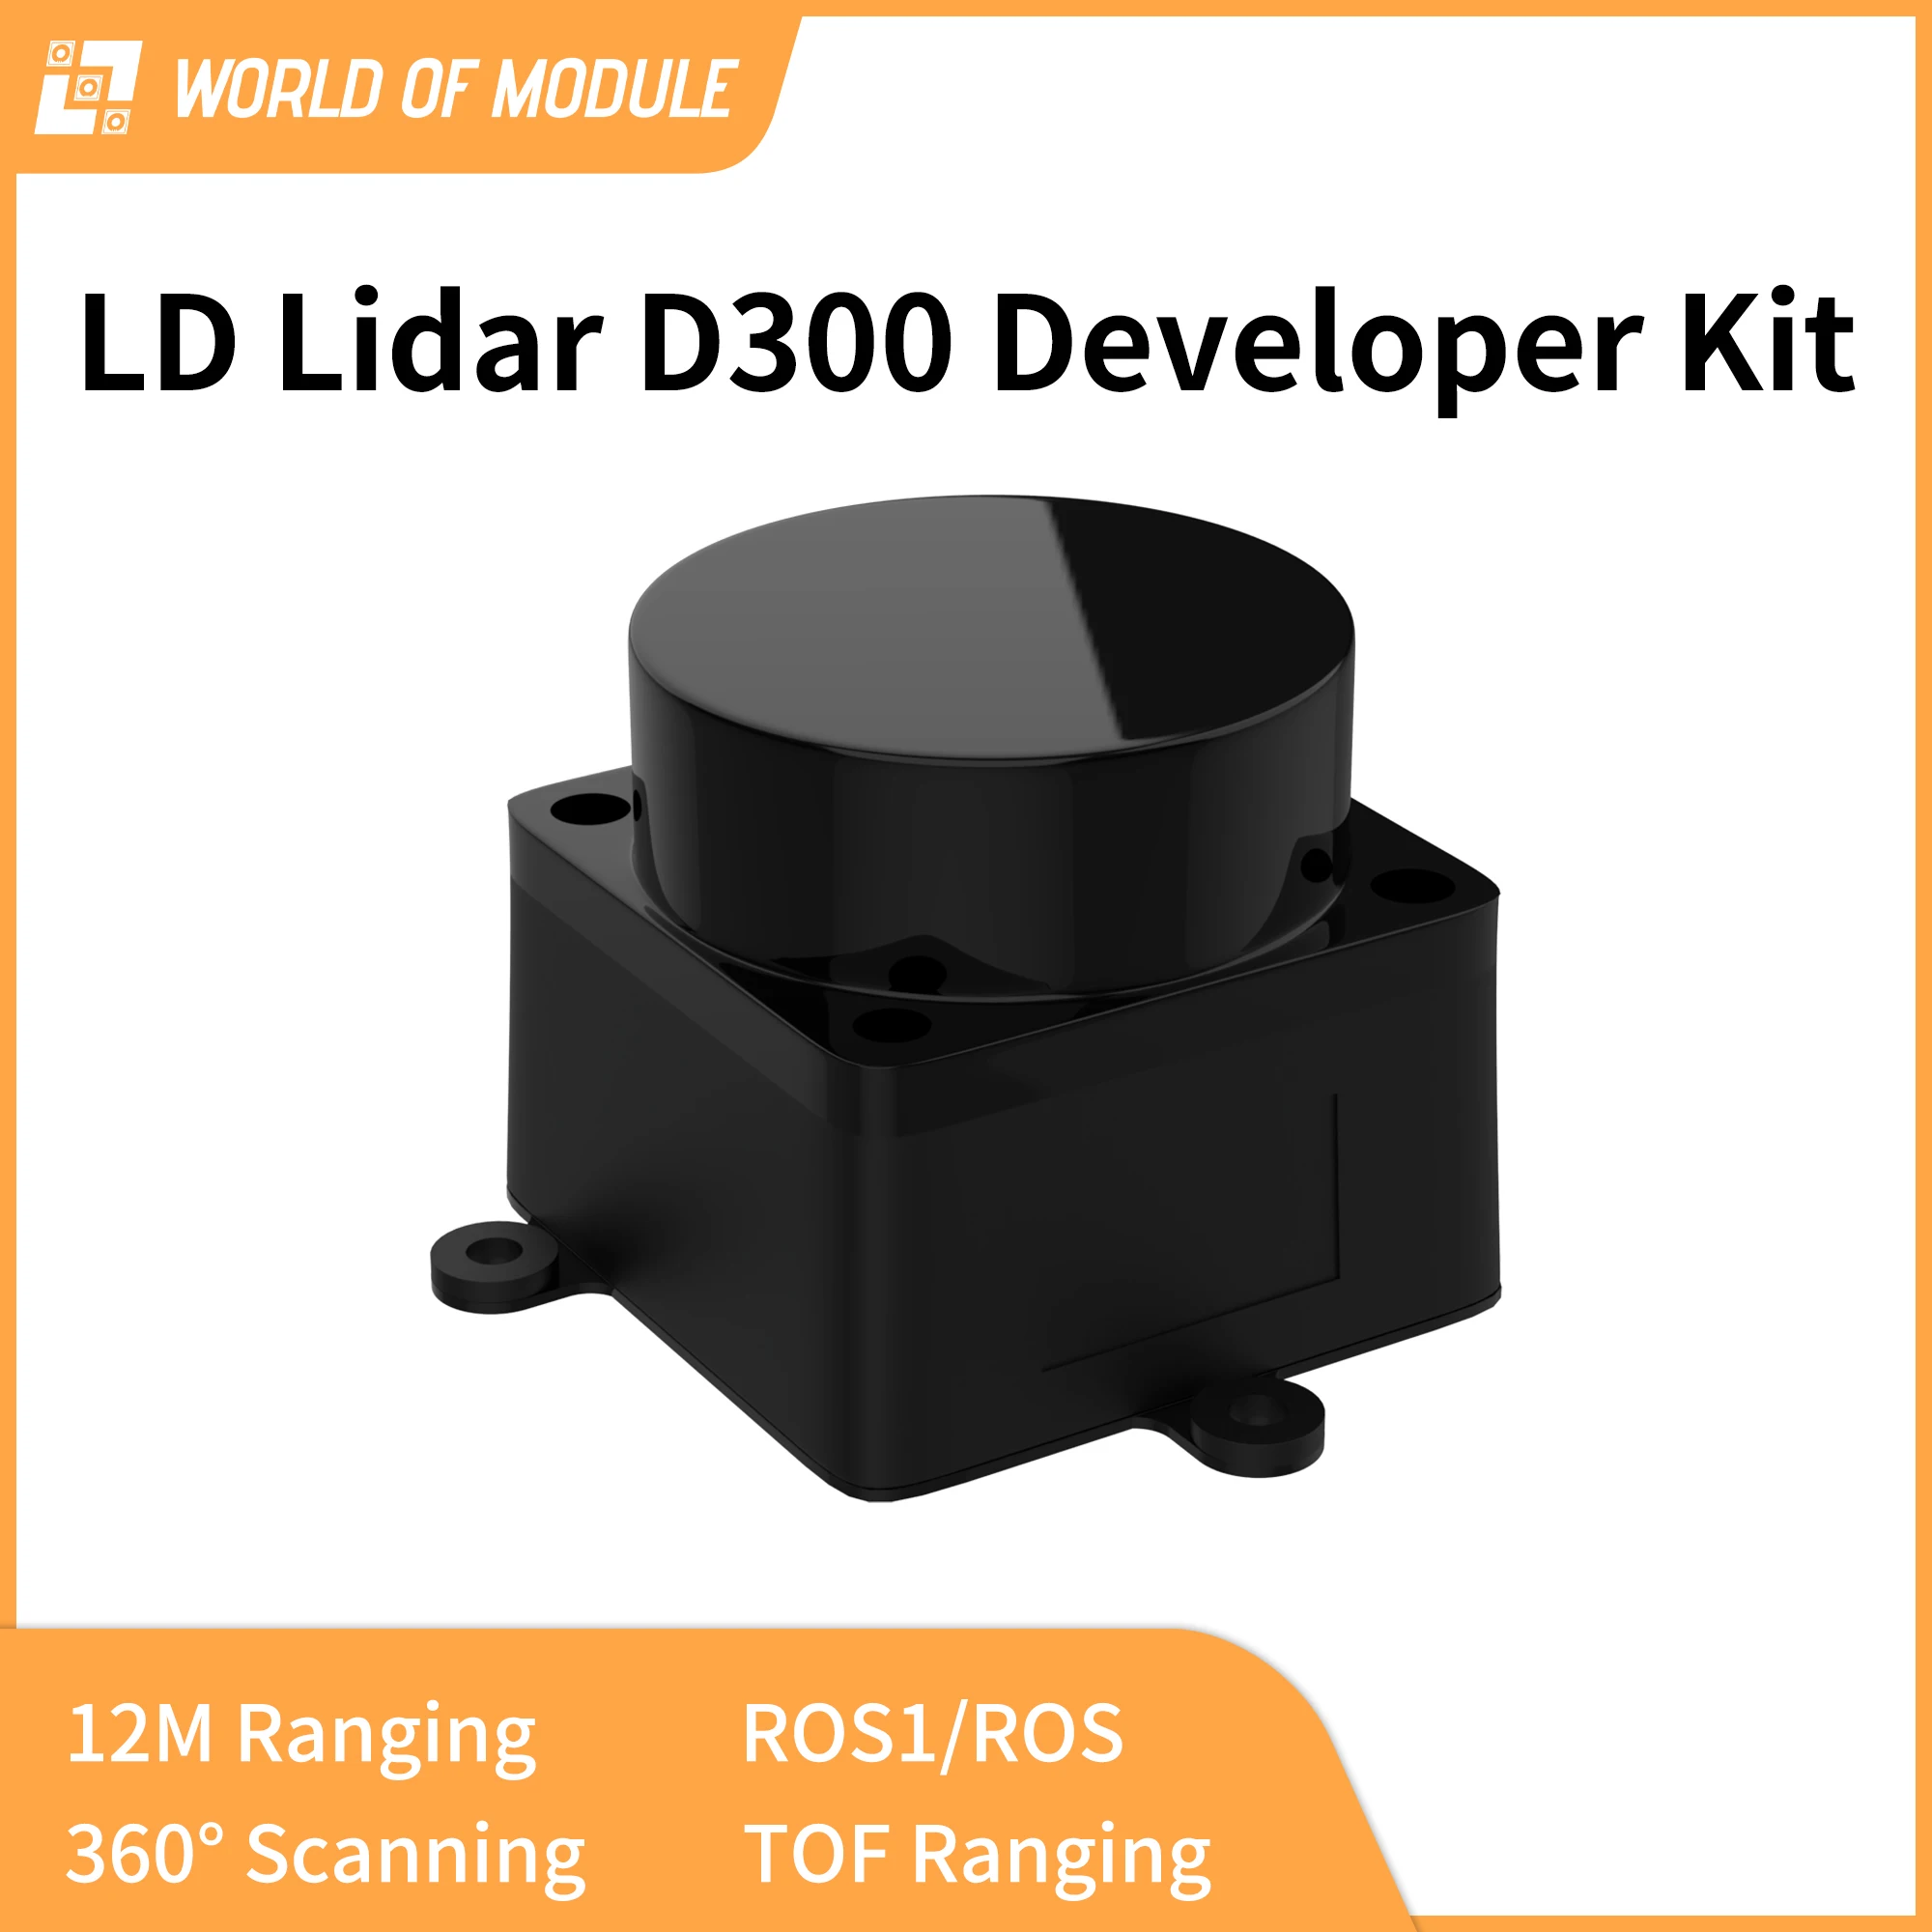 LD06 LD19 D300 Lidar Scanner 360°TOF LD LIDAR Ranging 3D Sensor Kit with 12m Range ROS2 ROS Robotics Raspberry Pi Jetson NANO